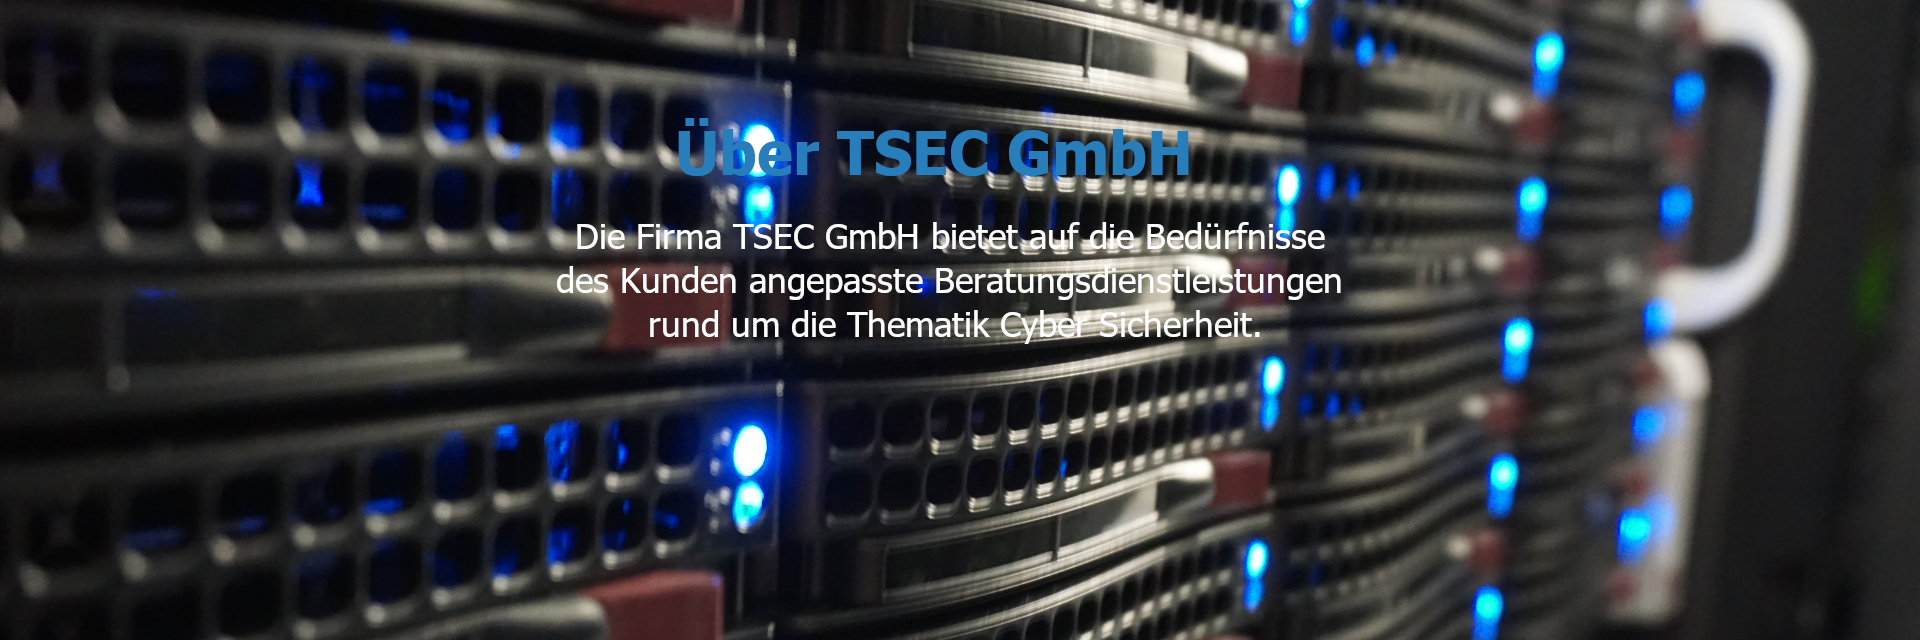 Über TSEC GmbH